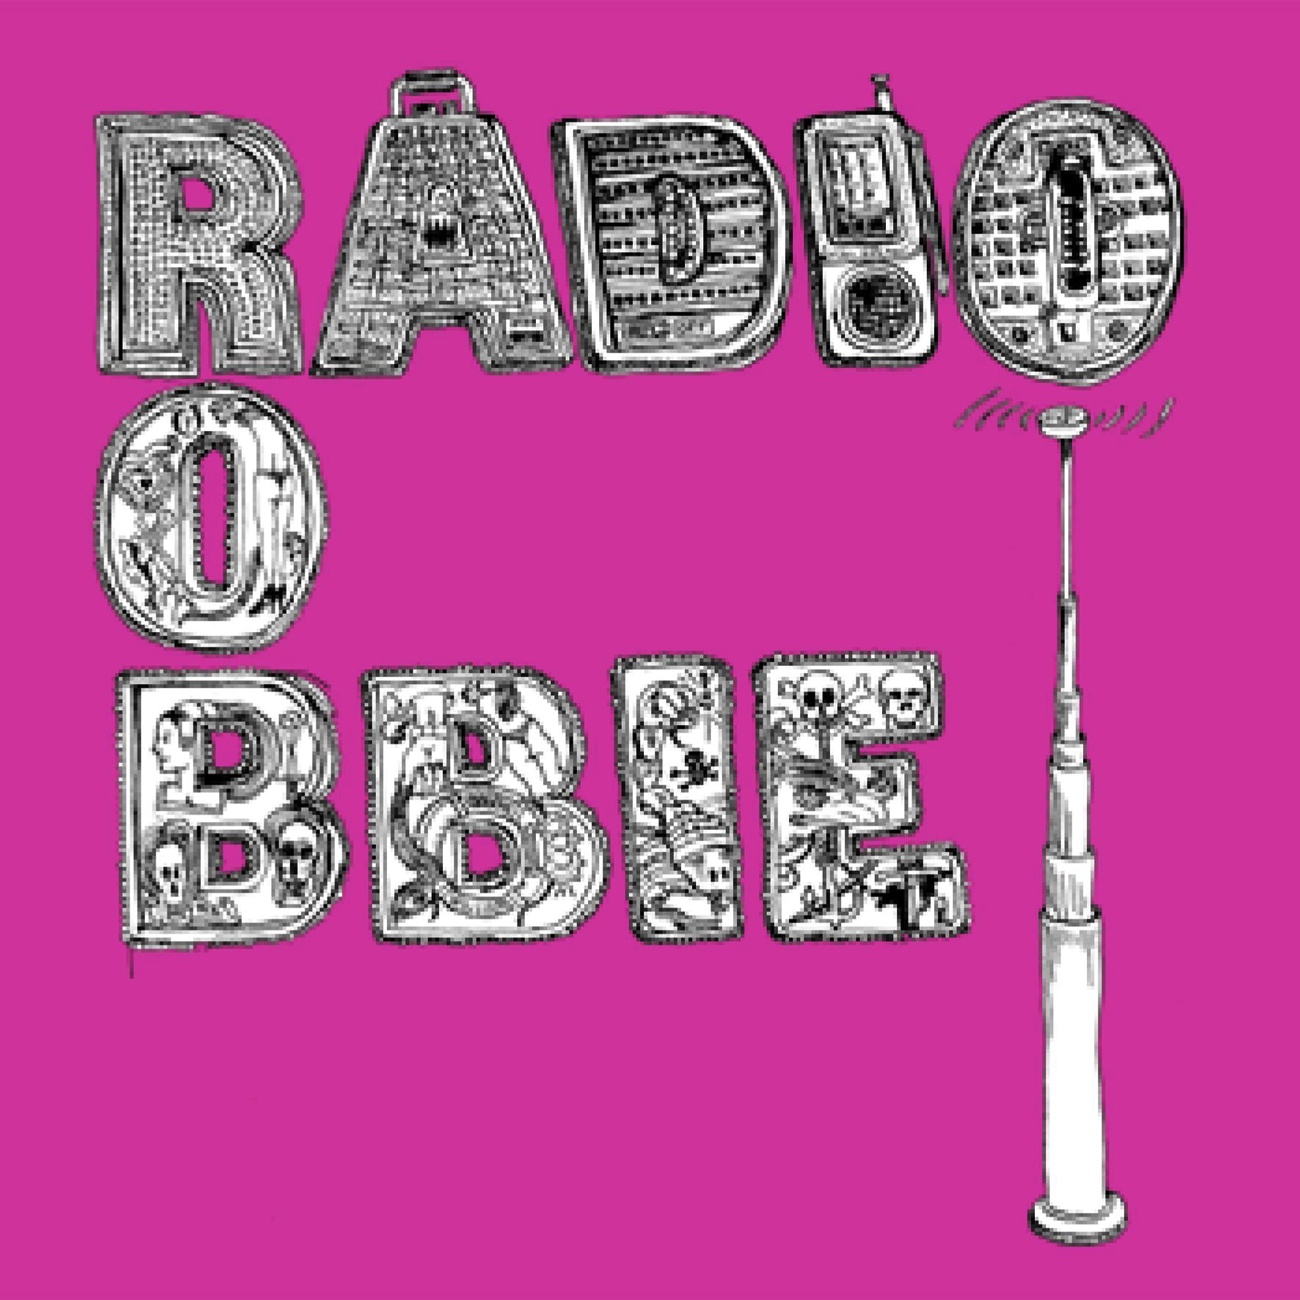 Radio (Sam La More Jumpin' Mix)